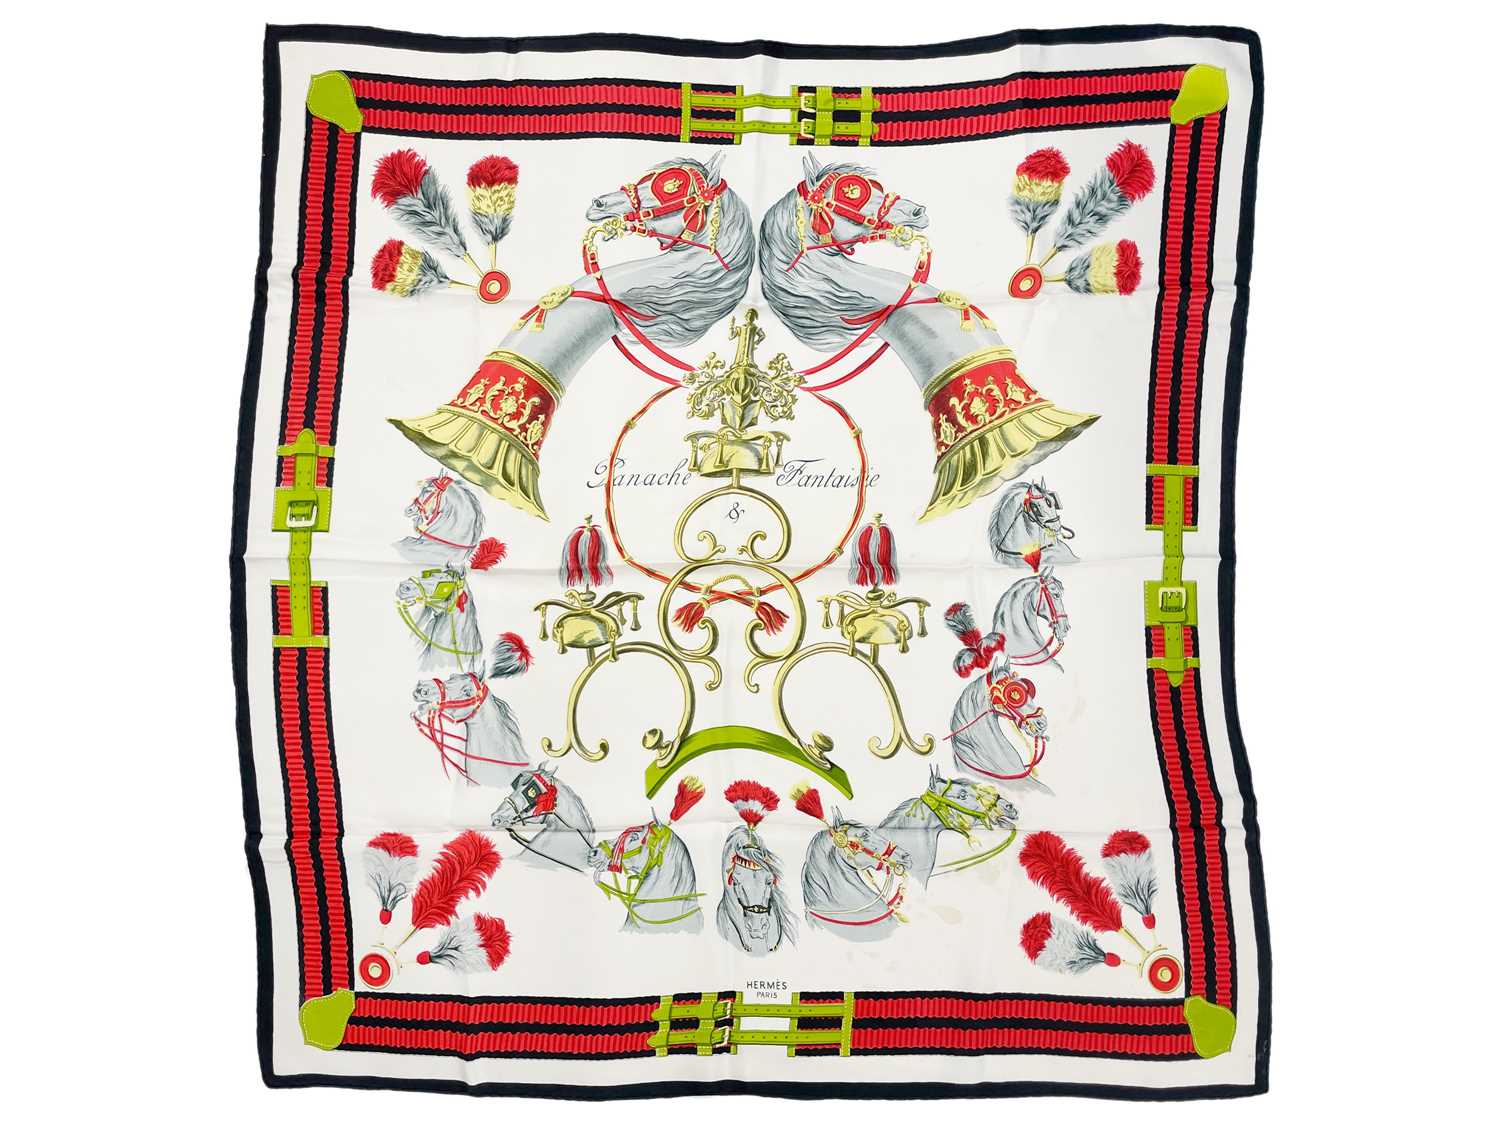 HERMES - Two equestrian printed silk scarves. - Image 2 of 3